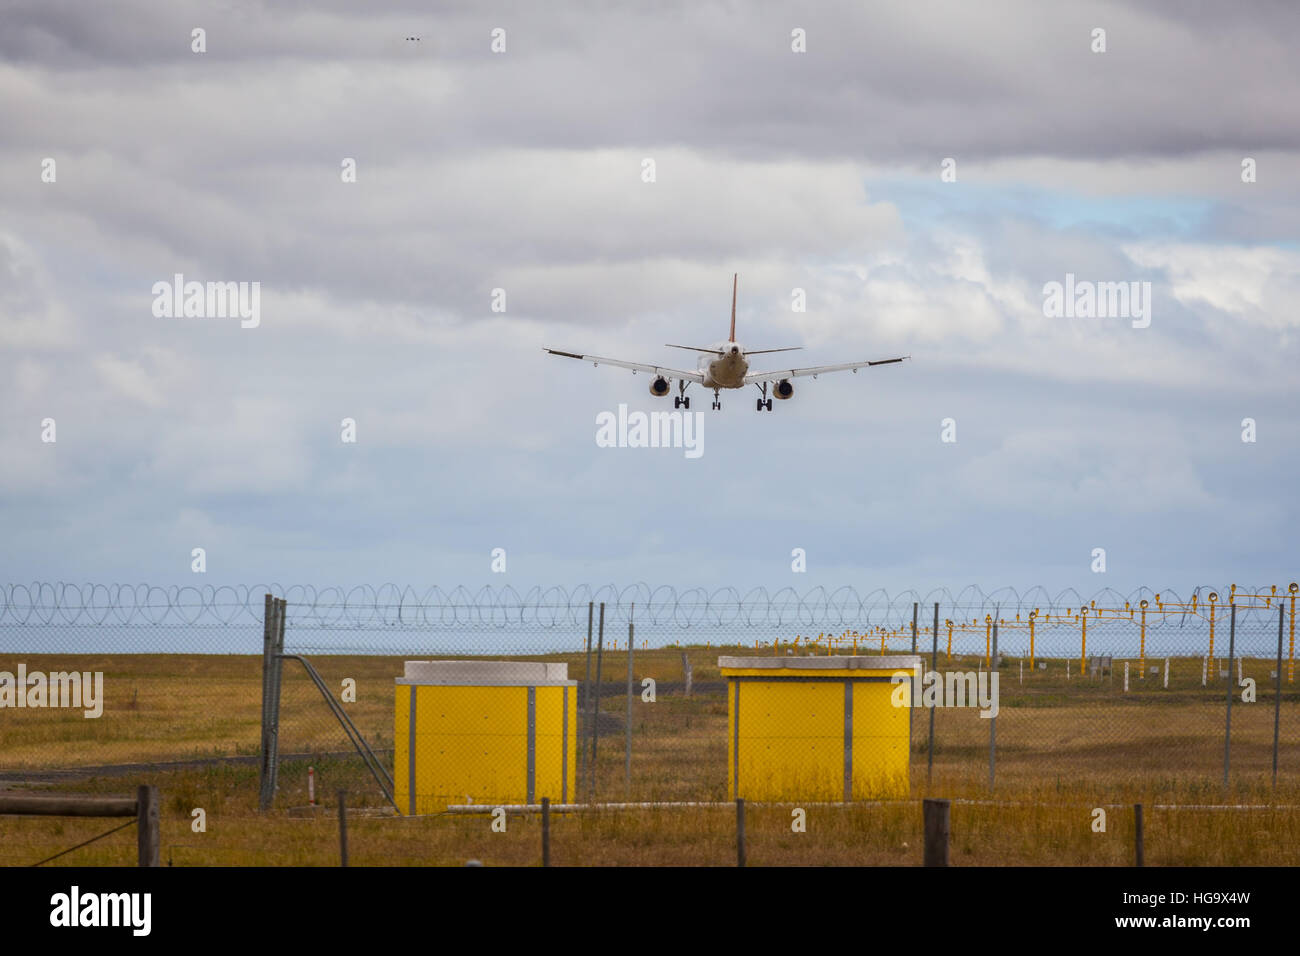 Passenger jet airplane landing at airport Stock Photo